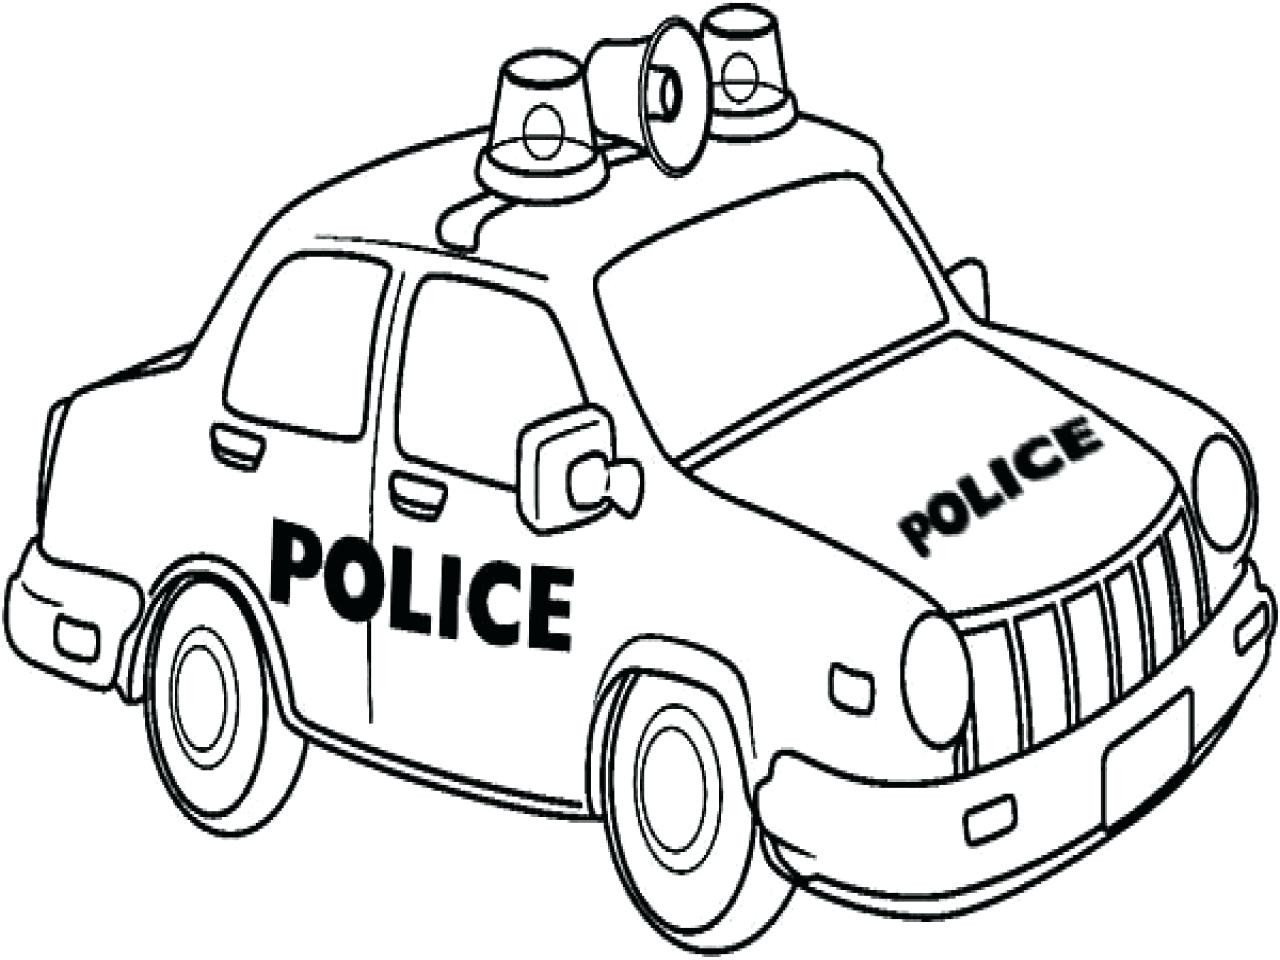 Police Cartoon Drawing : How to Draw a Cartoon Police Car - YouTube ...